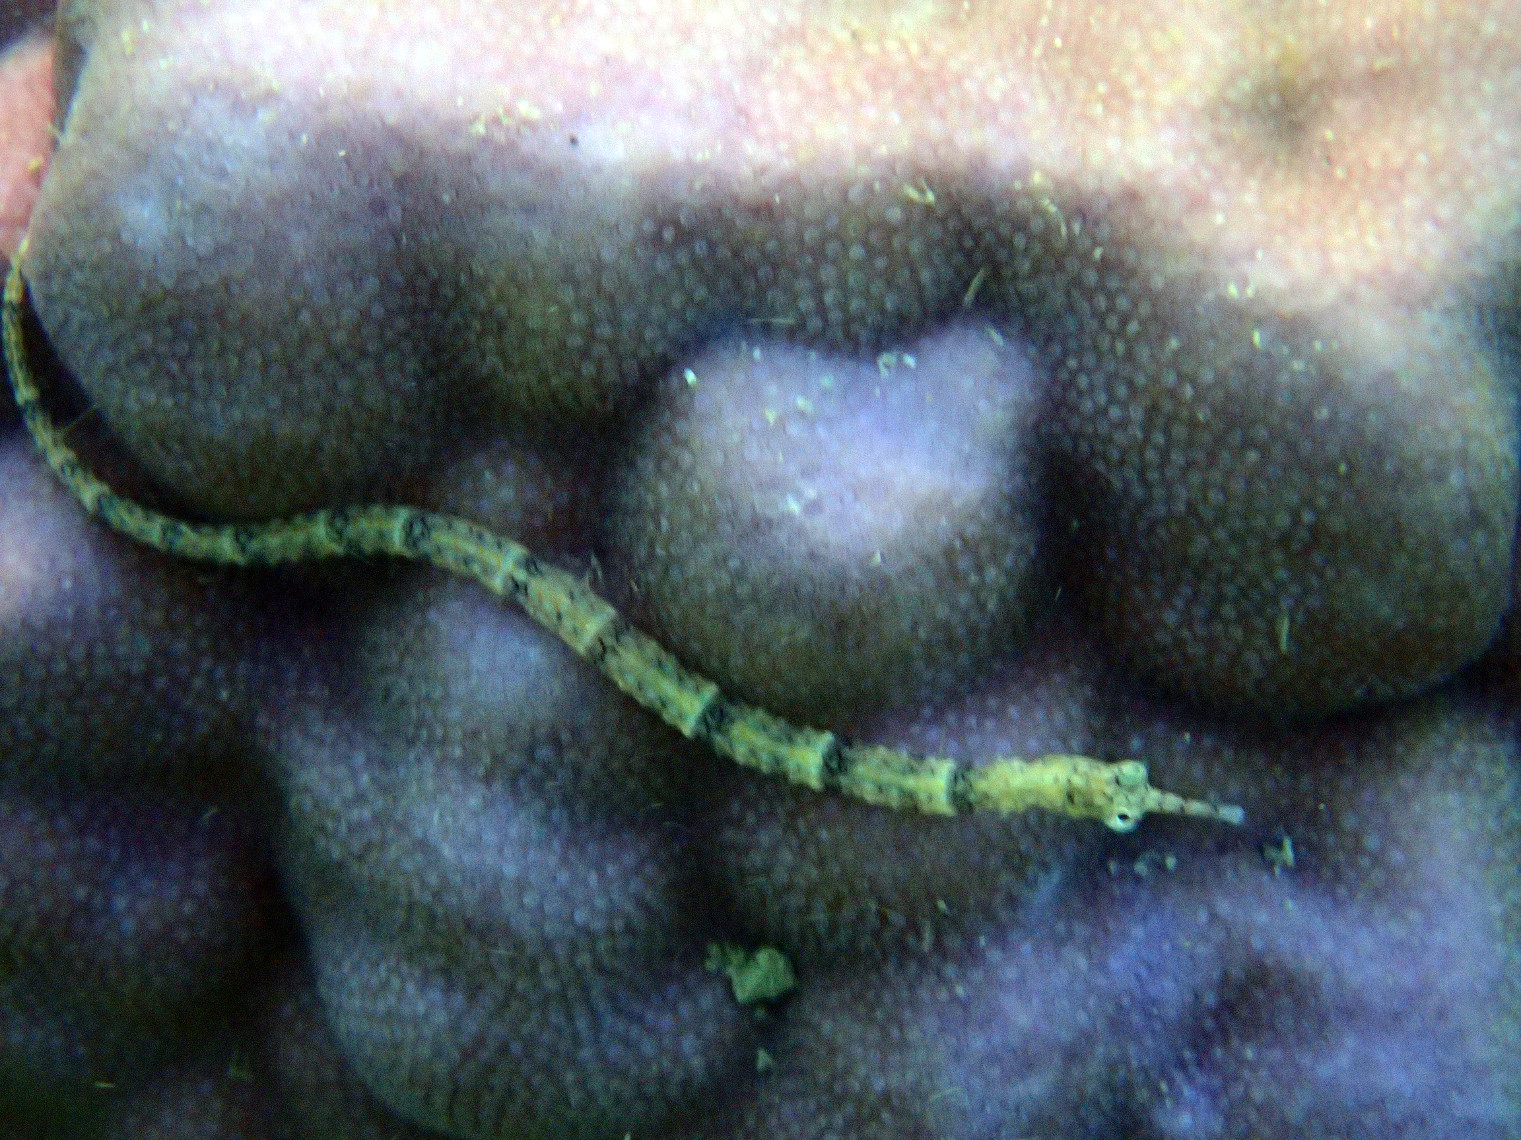 Corythoichthys haematopterus